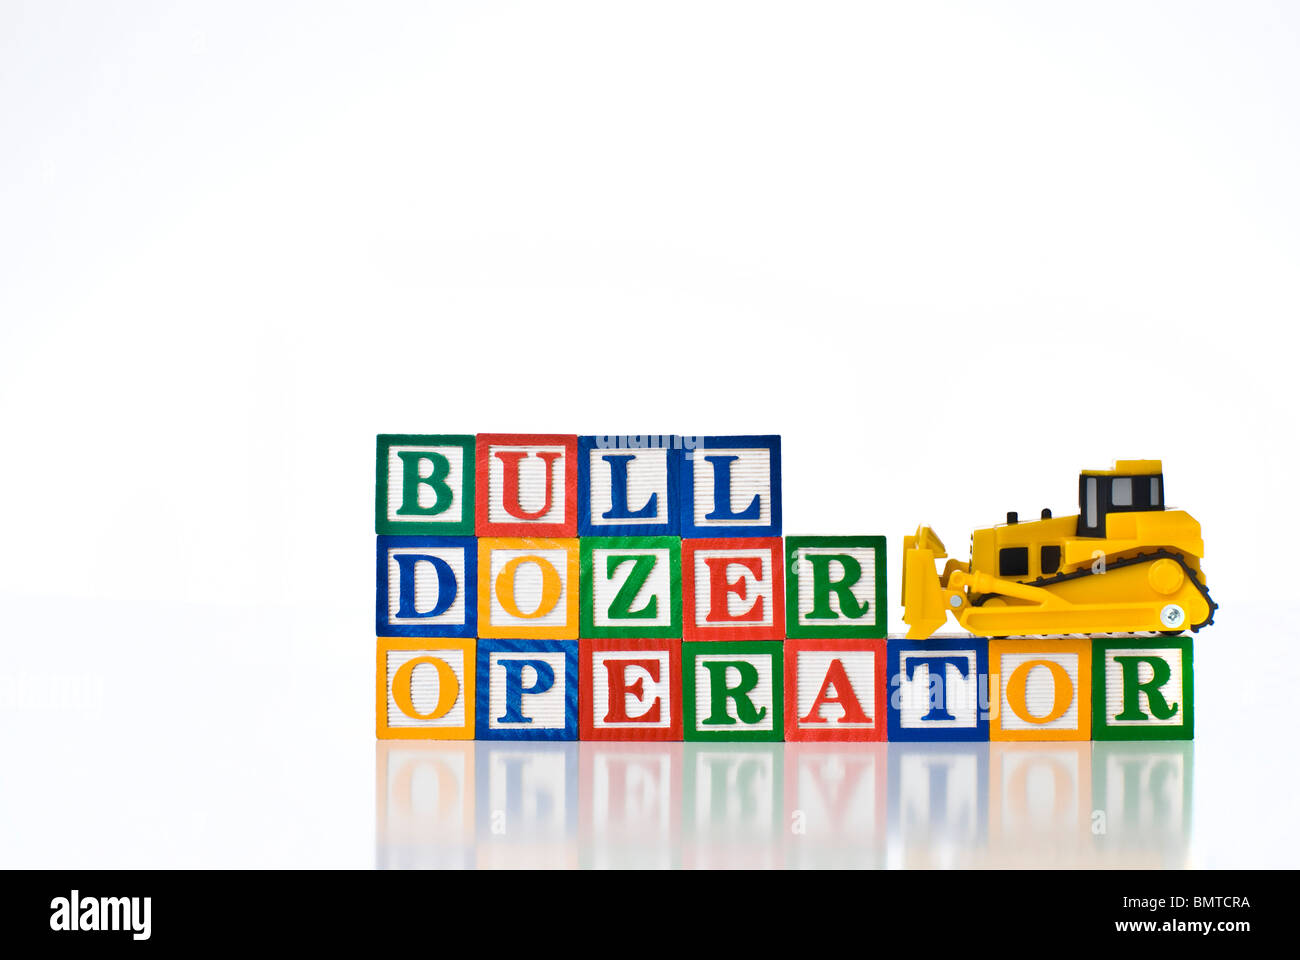 Colorful children's blocks spelling BULL DOZER OPERATOR with a model